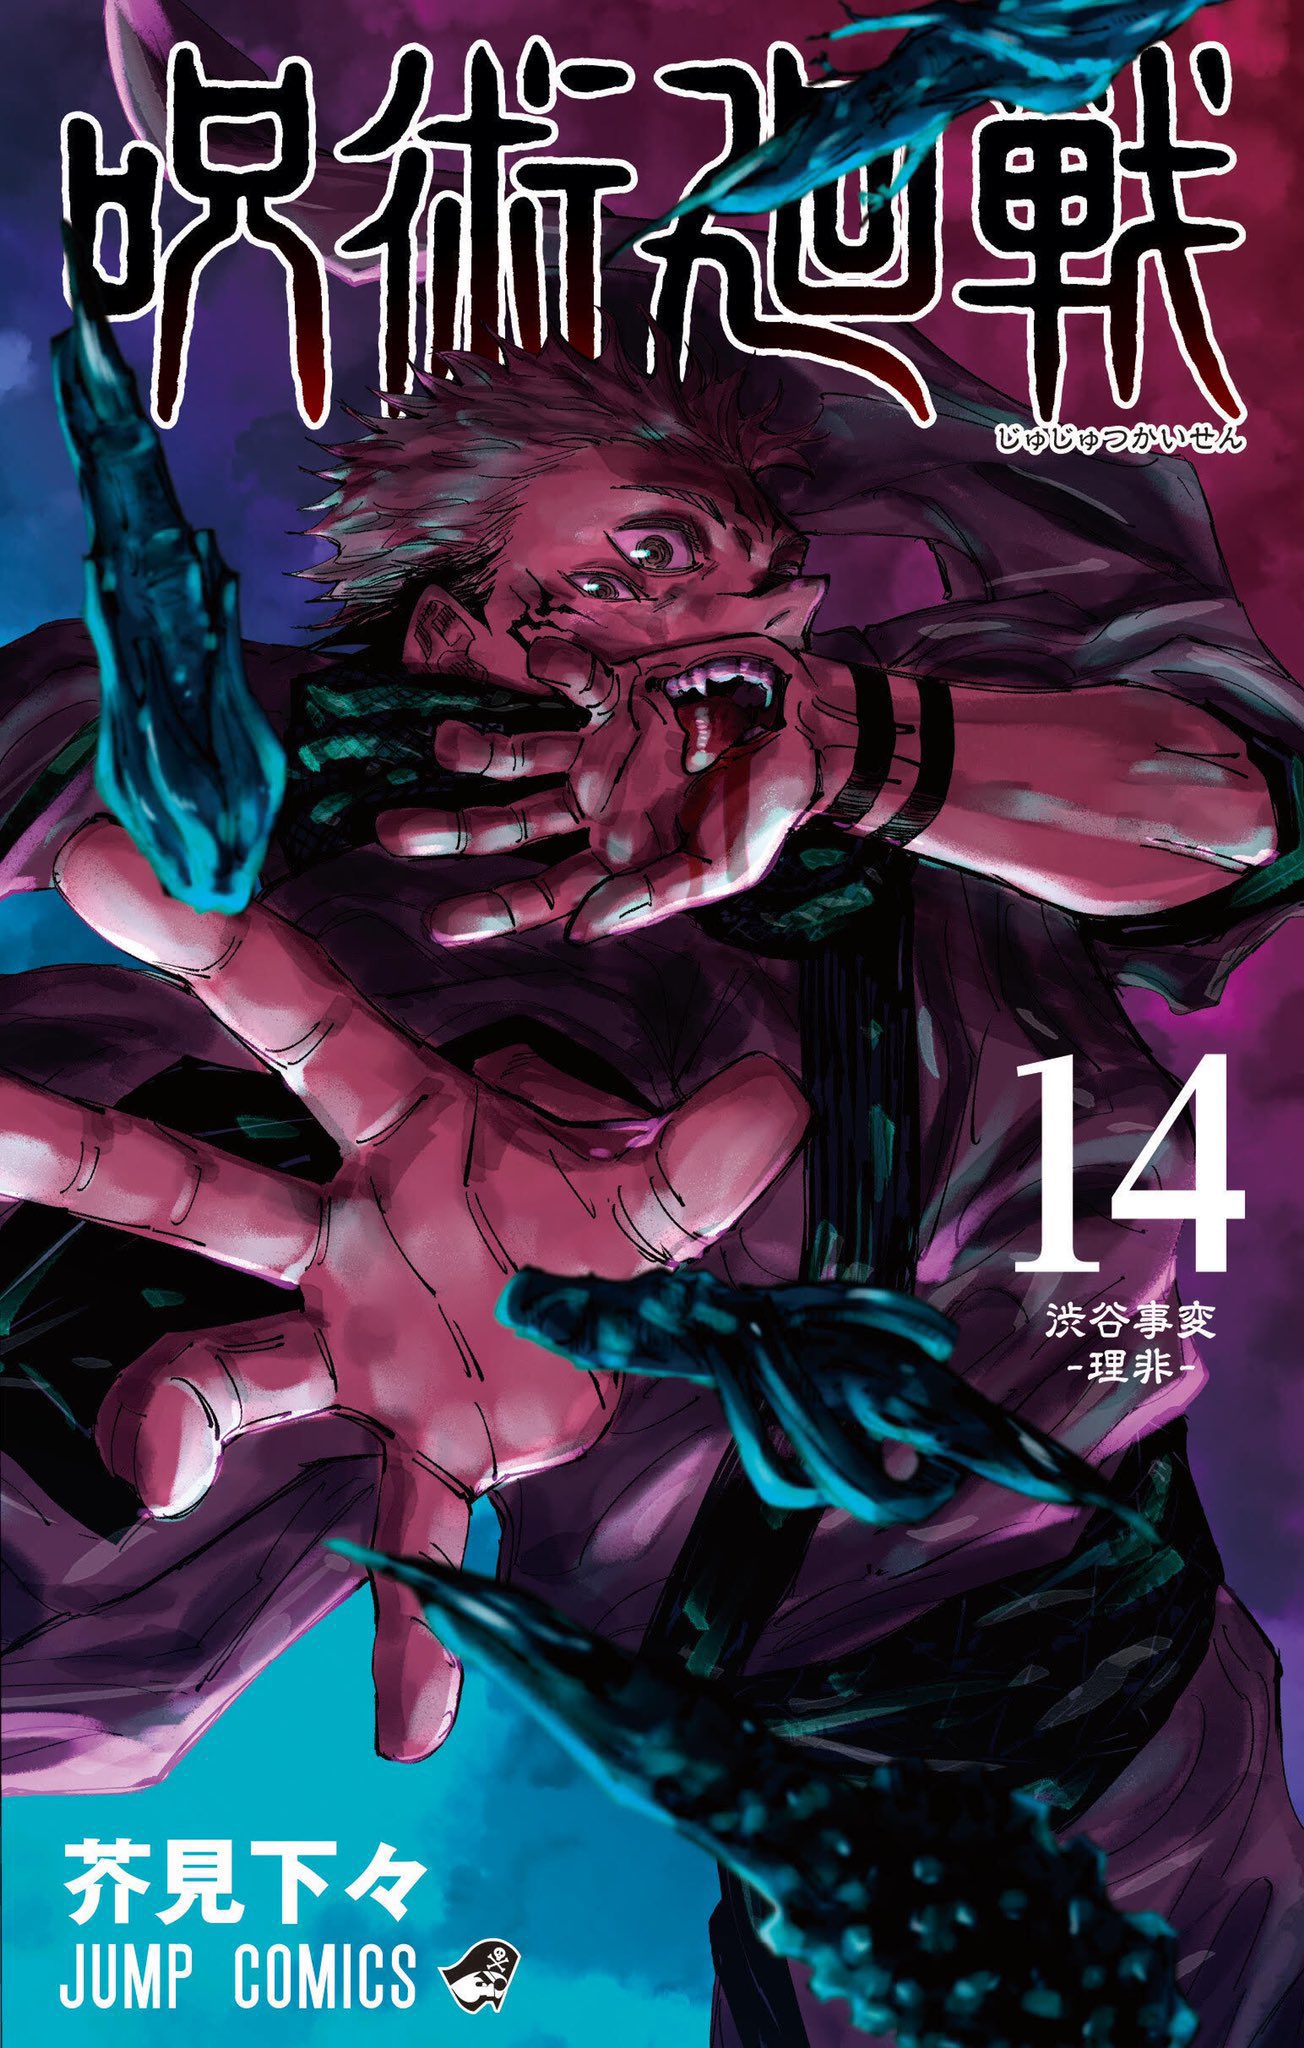 jujutsu kaisen manga end 2 years - volume 14 cover